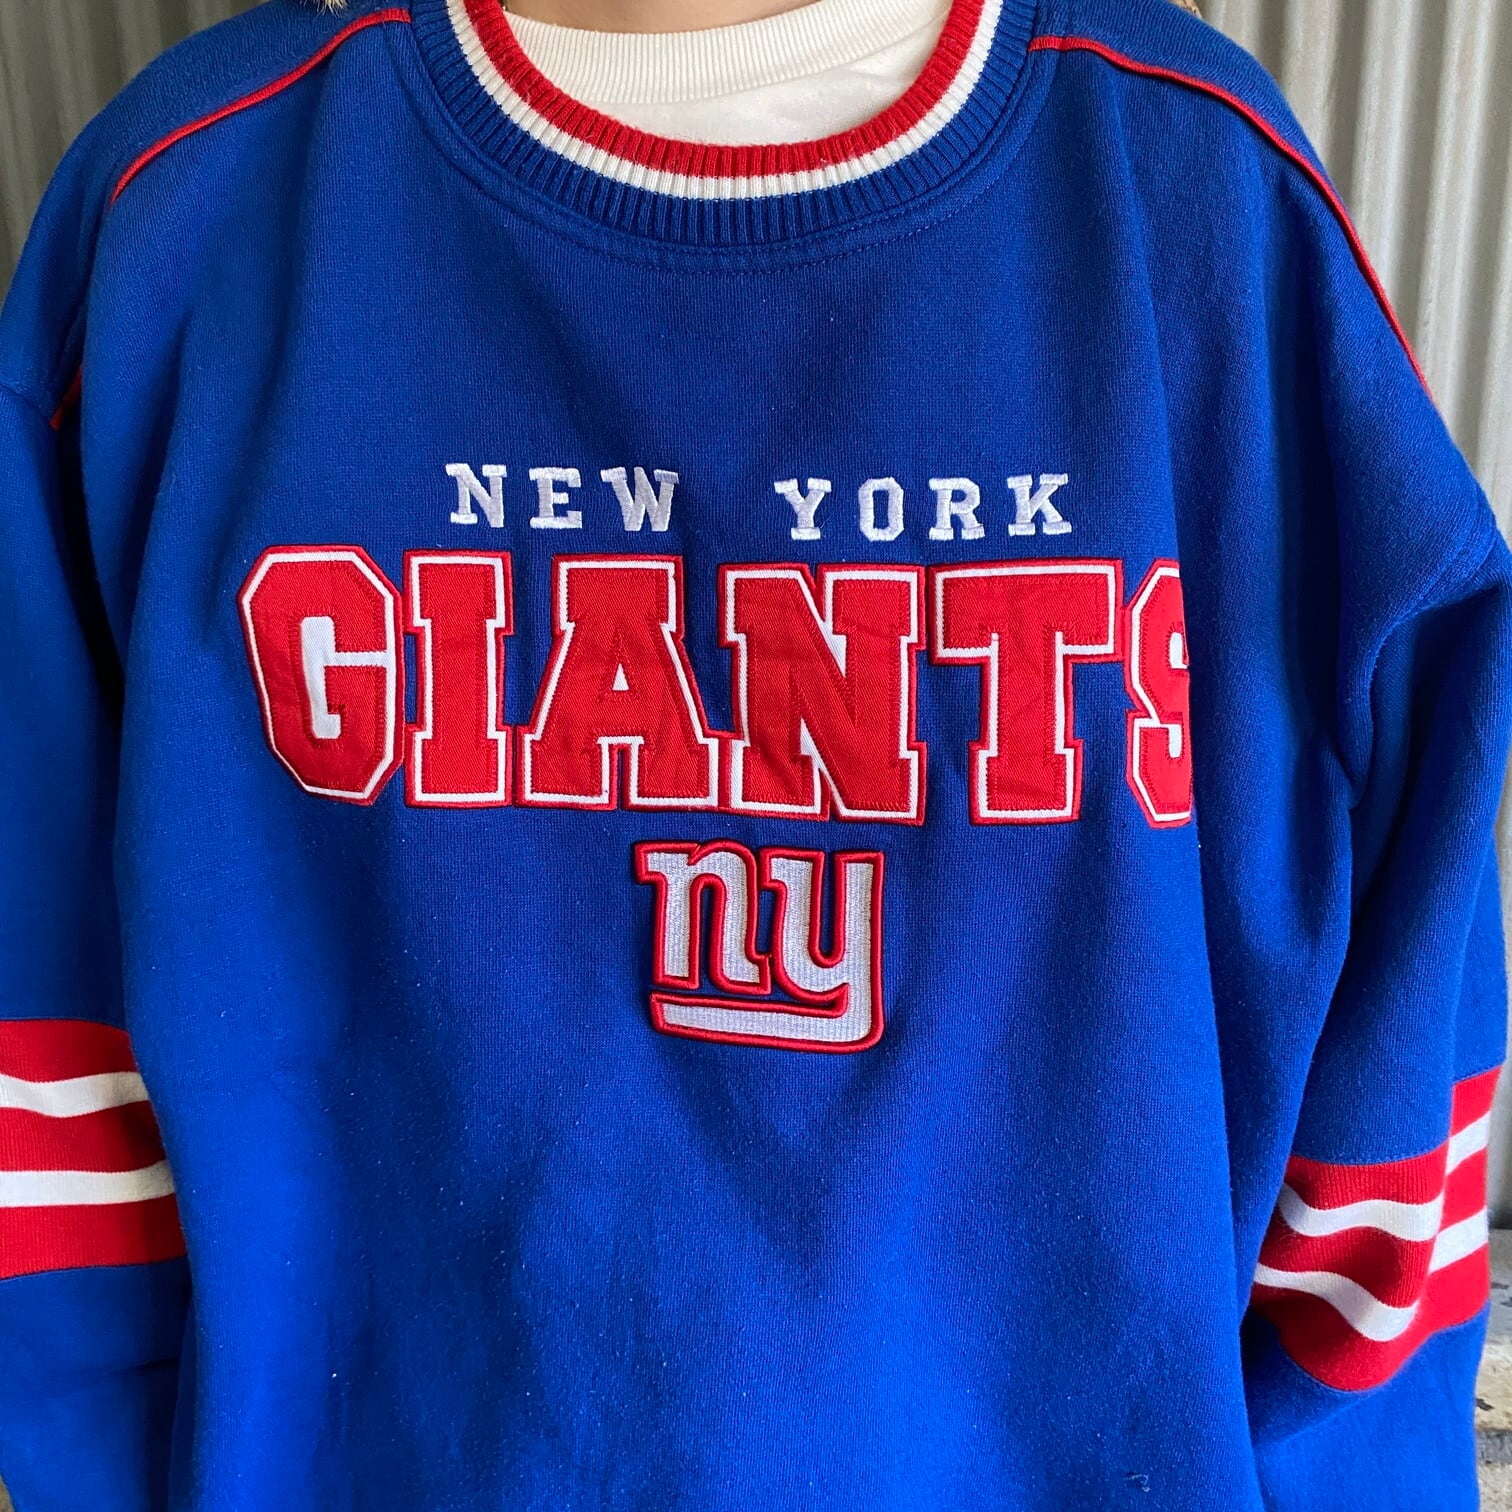 XL！ NFL New York Giants チーム ロゴ 刺繍 スウェット